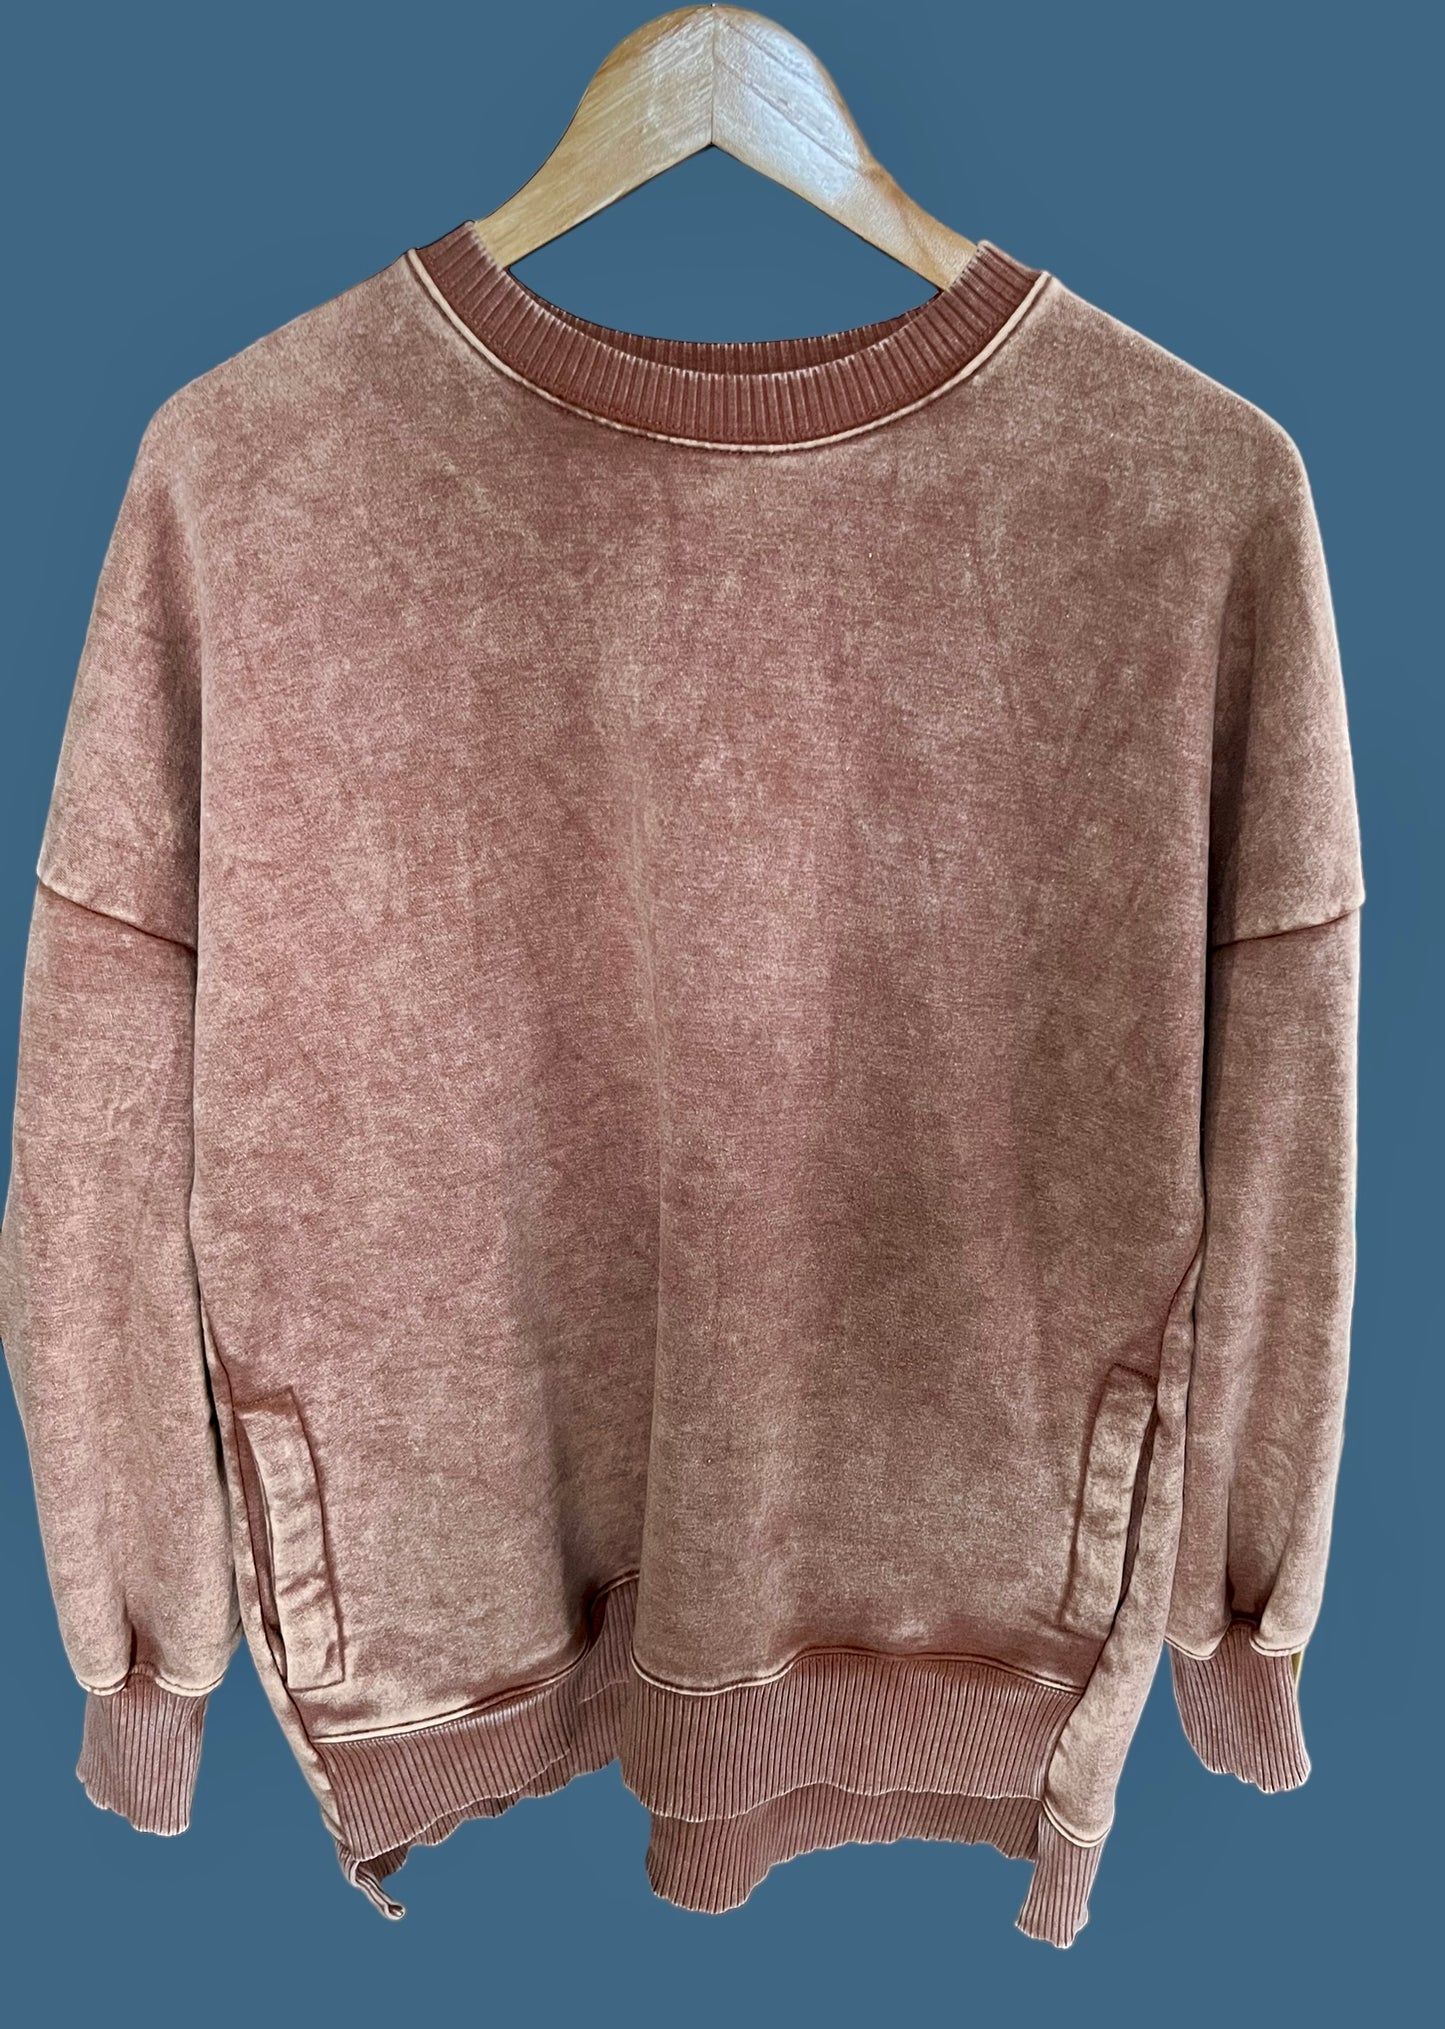 Mineral Wash Fleece Sweatshirt Pullover